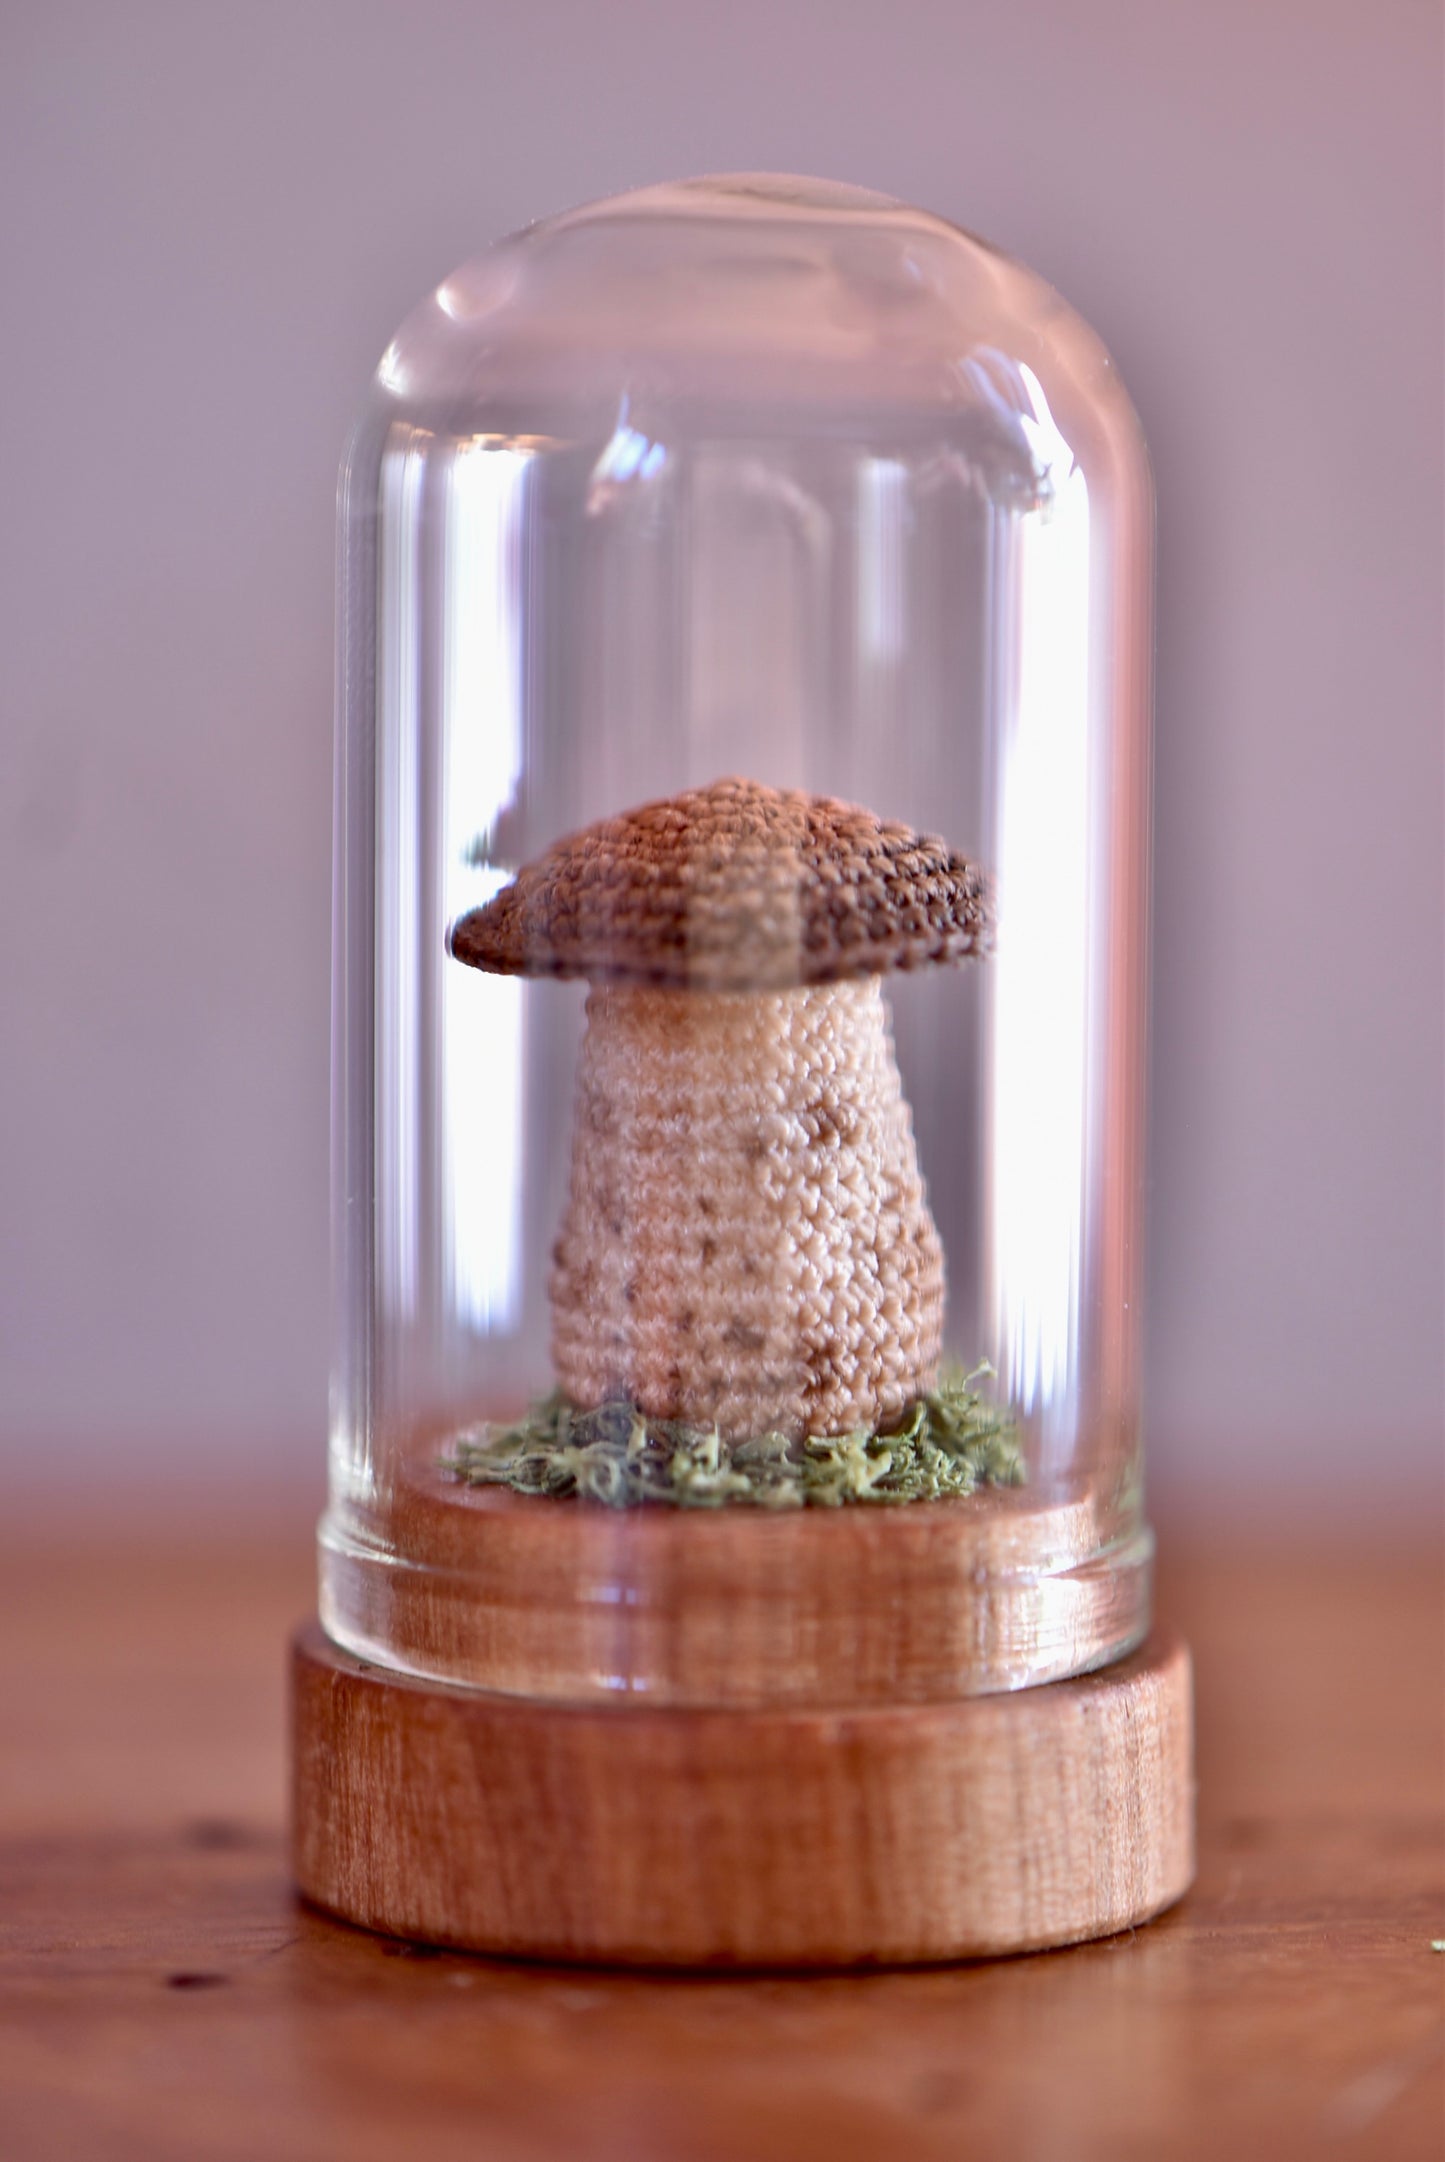 Crocheted Tiny Mushroom  - Collaboration with Tinybellsoftheprairy